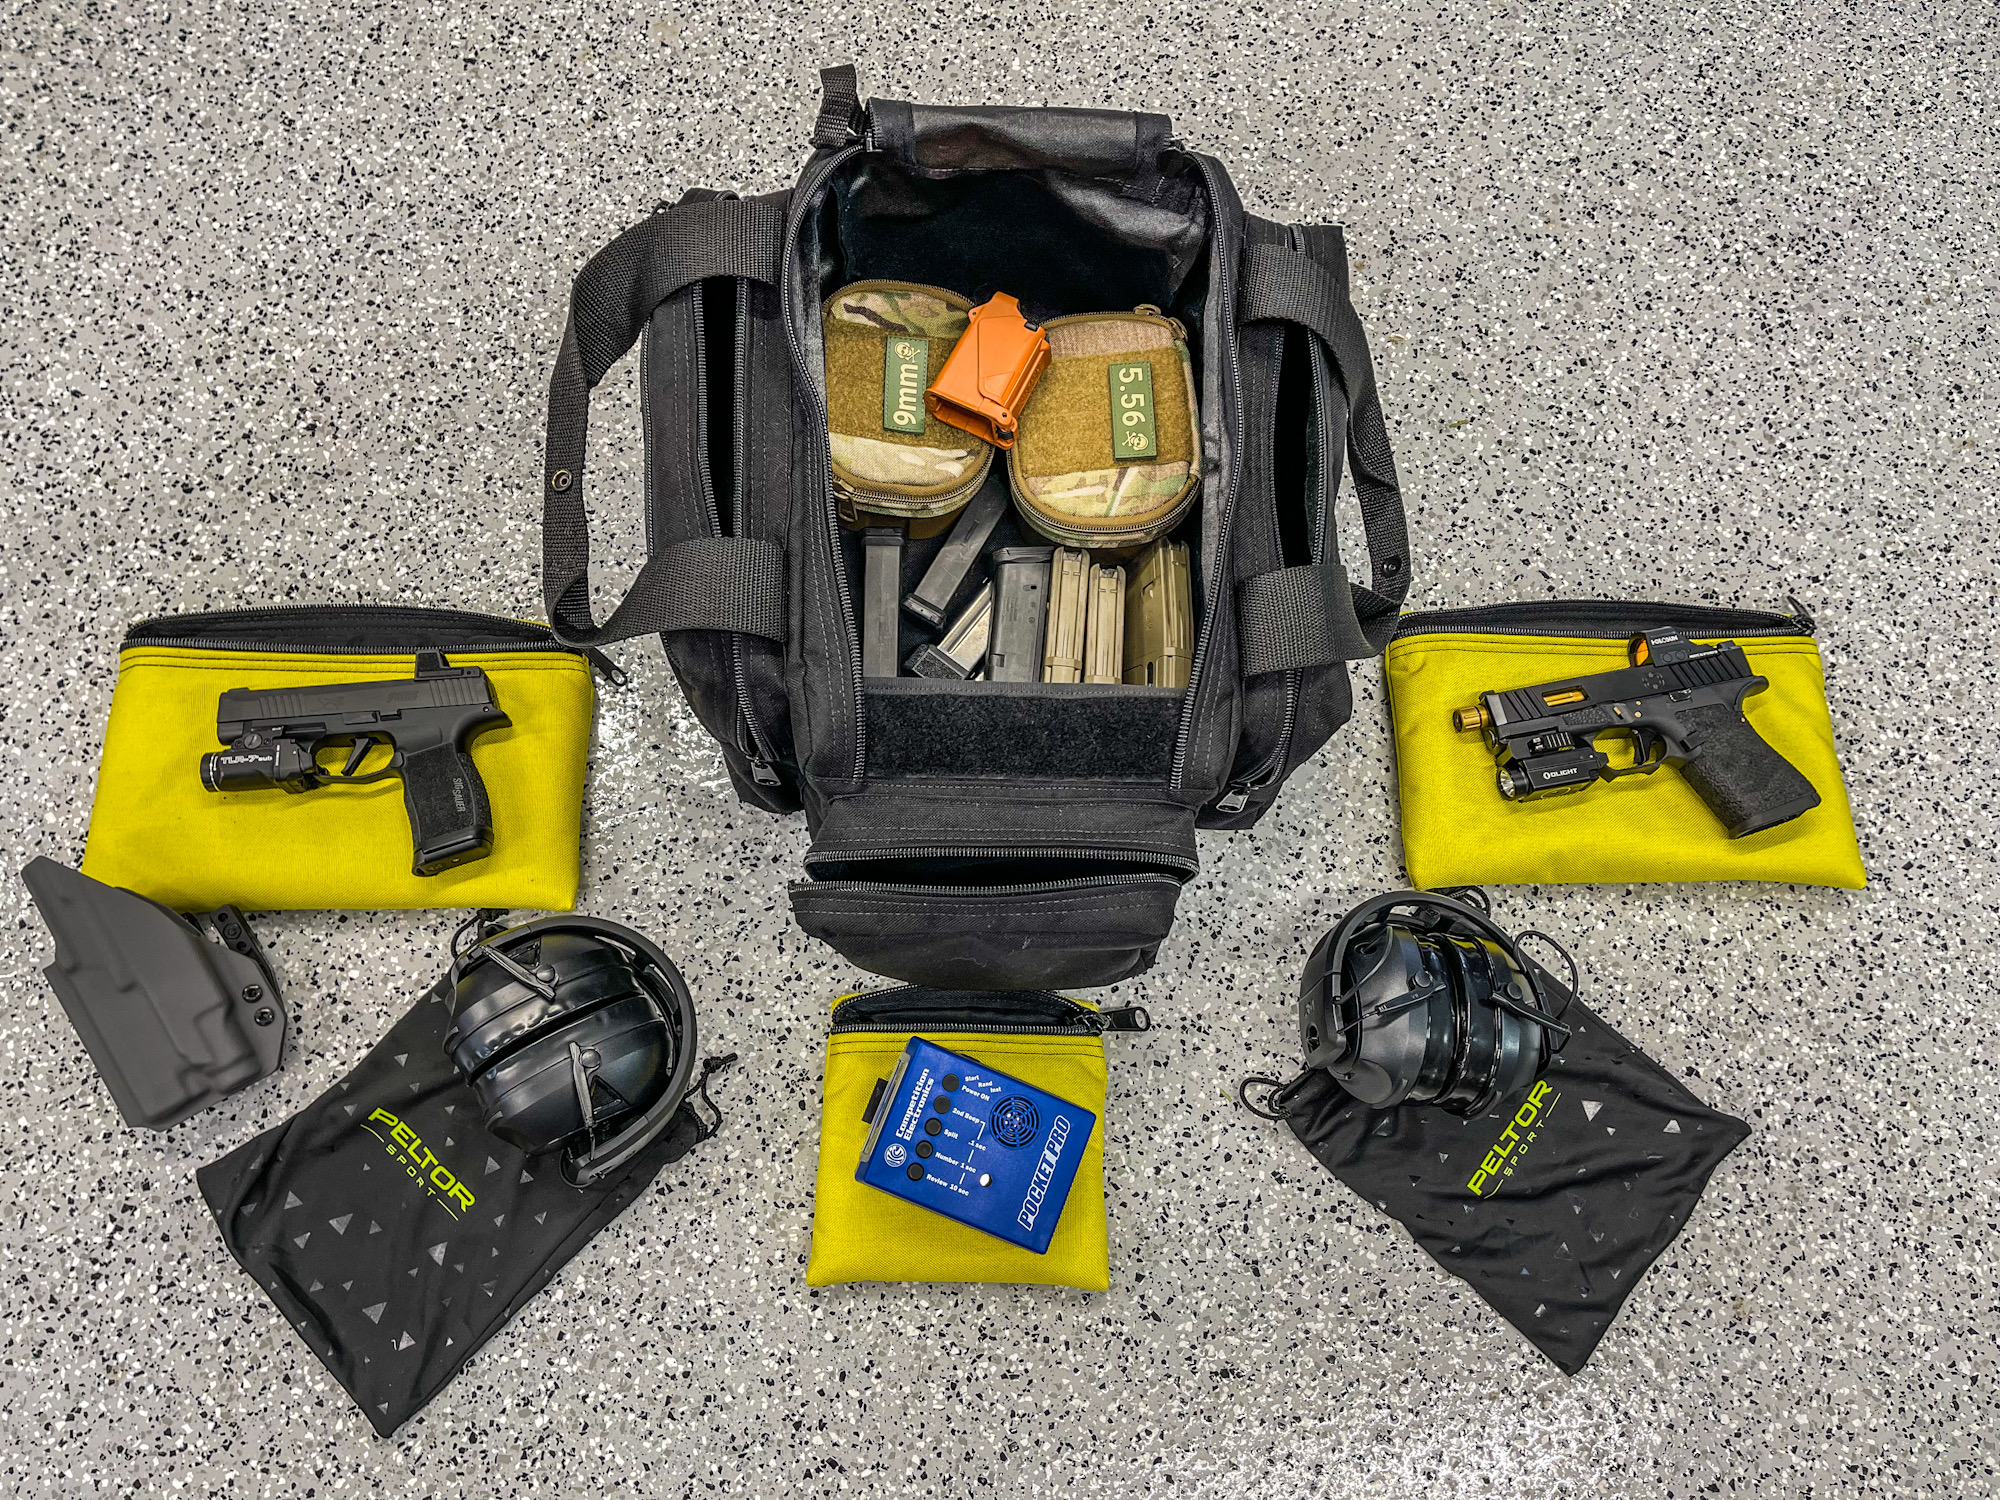 Premium Range Ready Bag for Shooting Enthusiasts